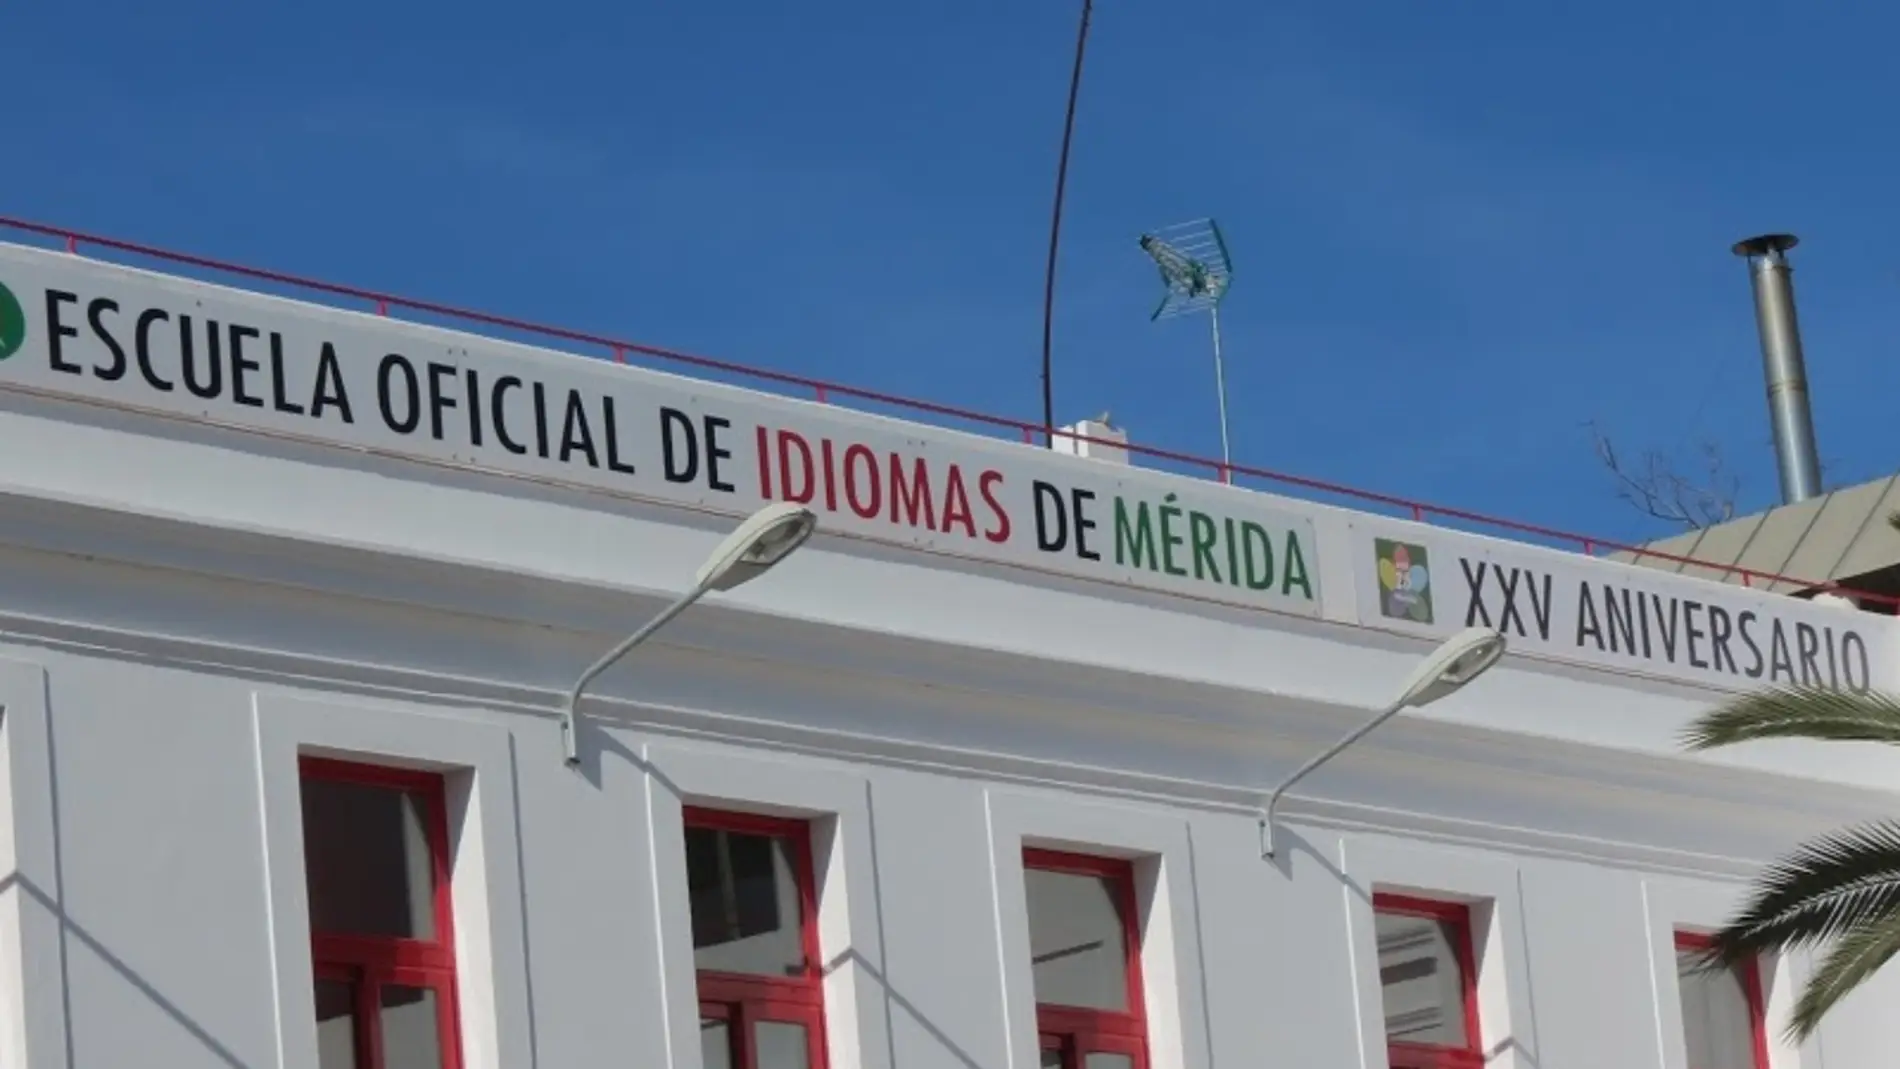 Escuela Oficial de Idiomas de Mérida 